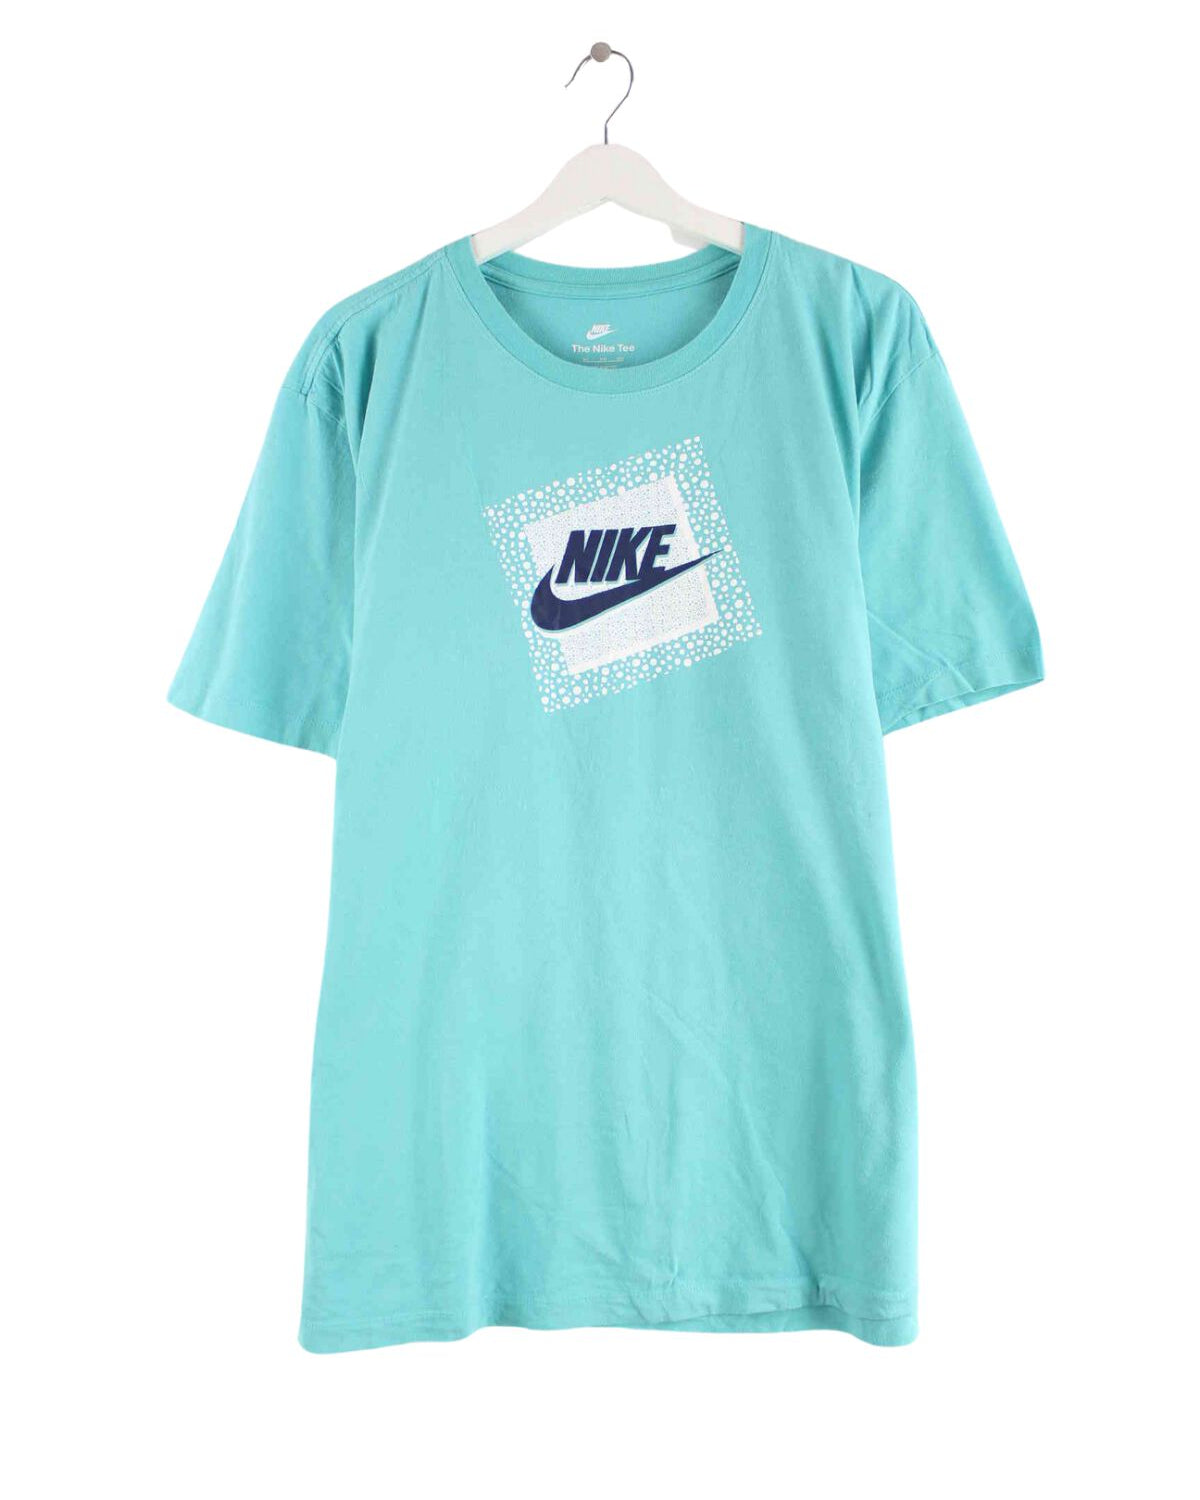 Nike Print T-Shirt Blau XL (front image)